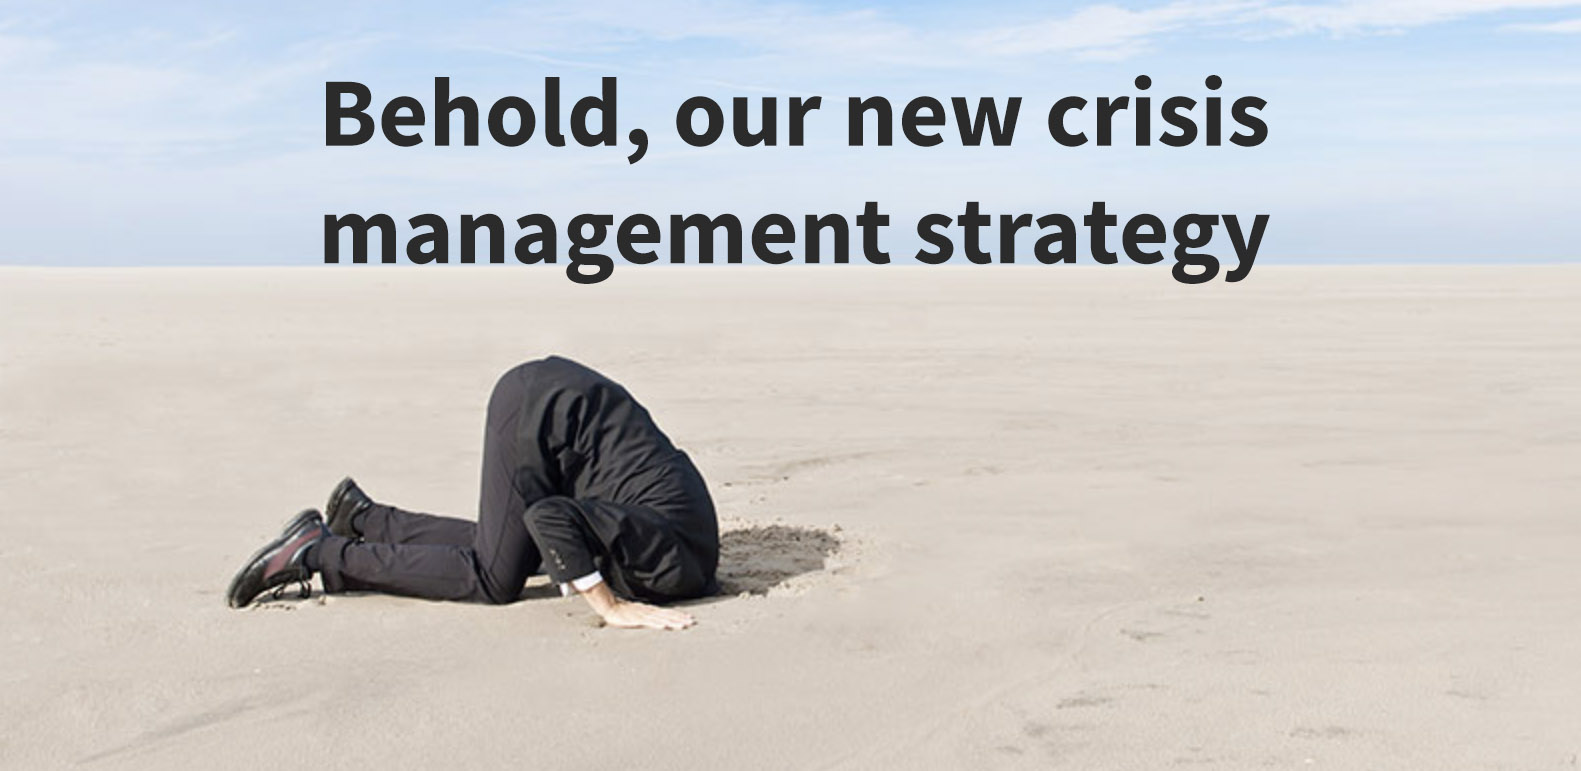 Crisis management strategy